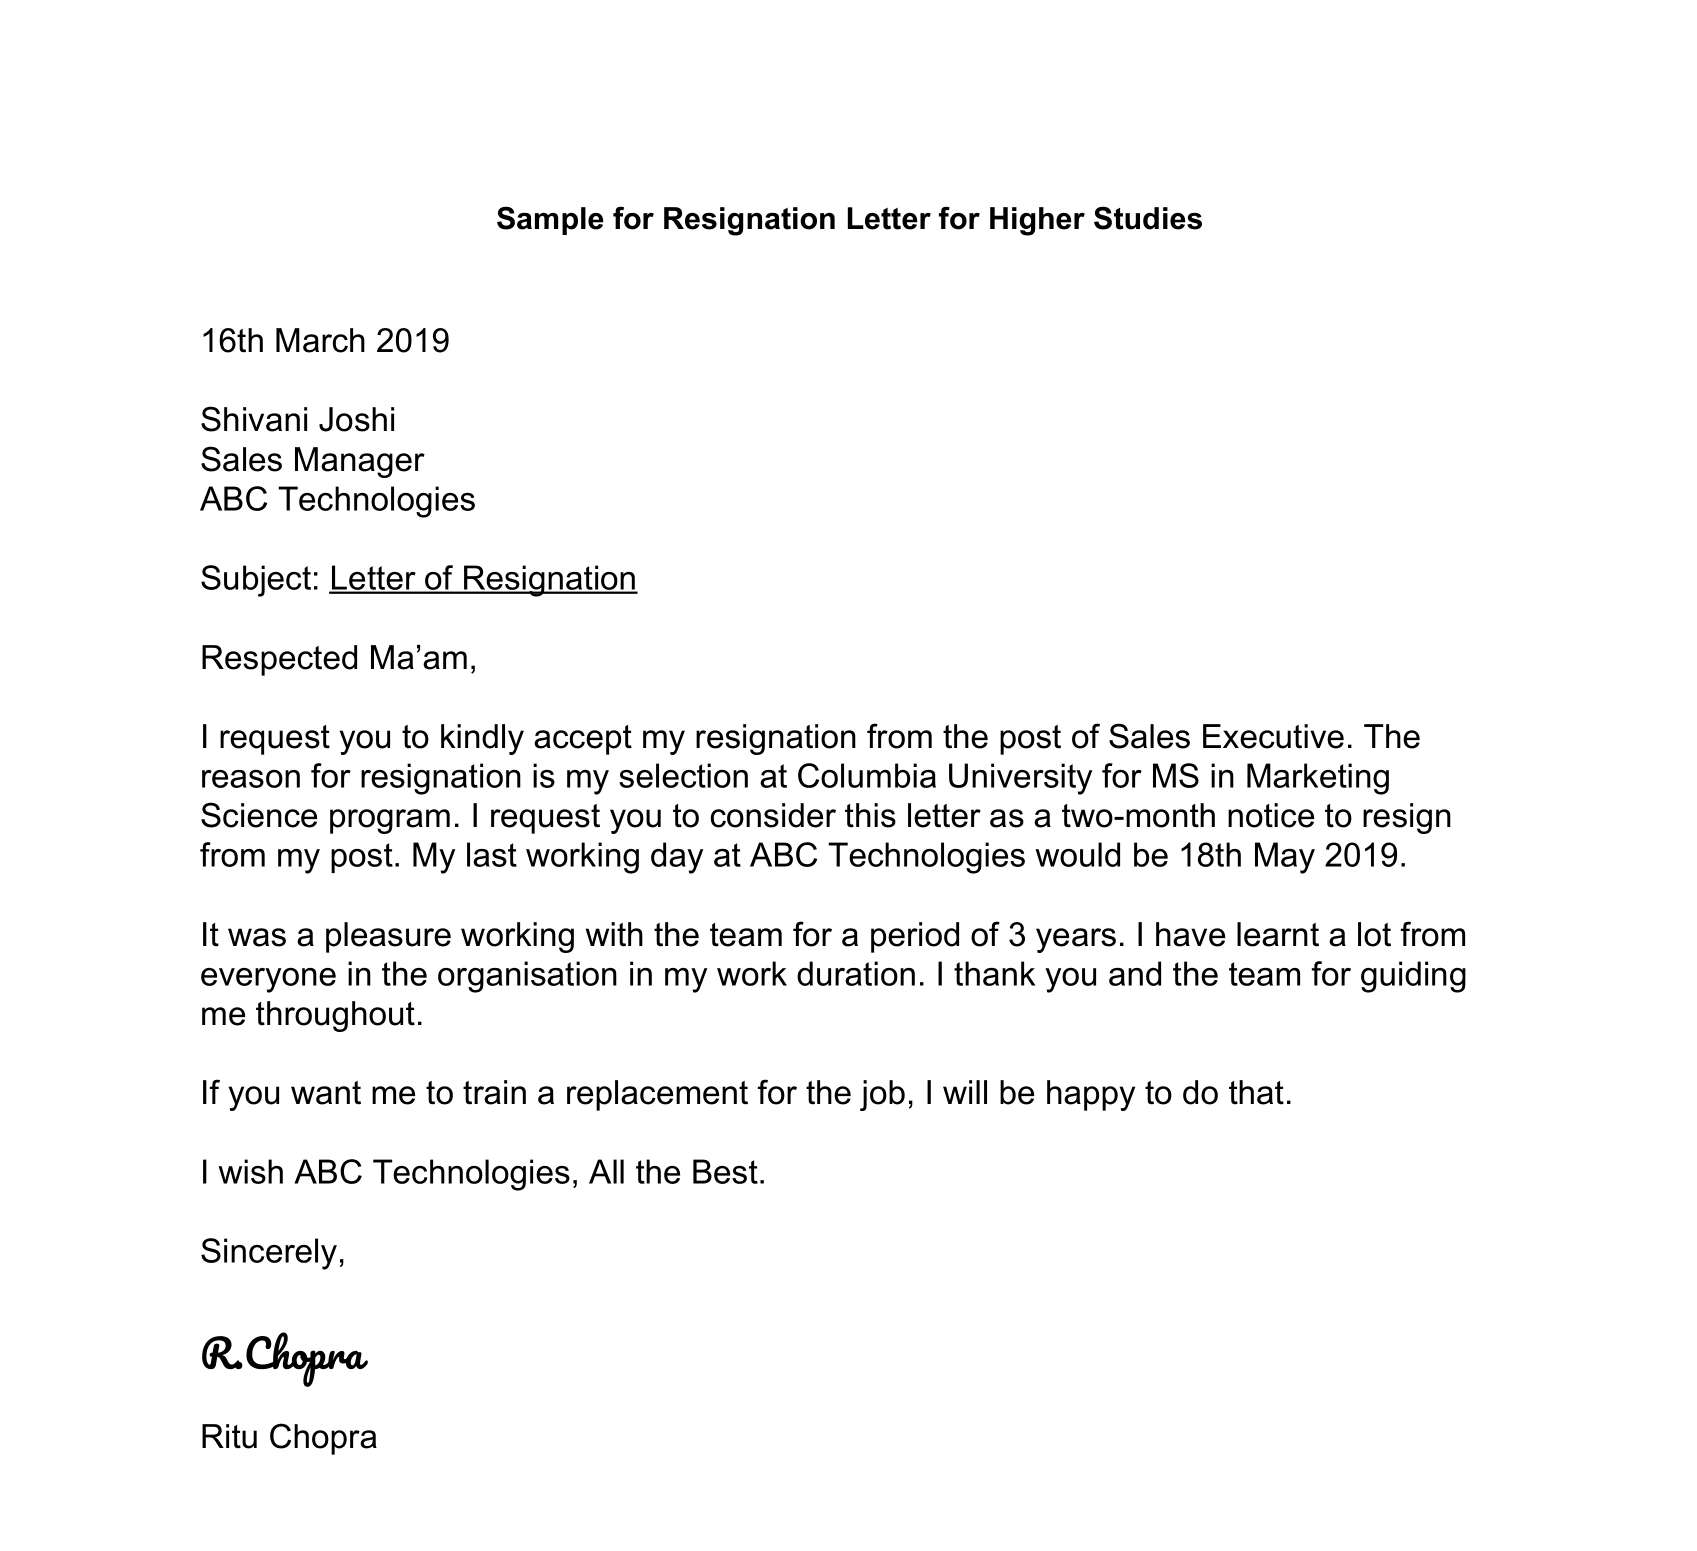 formal resignation letter 1 month notice